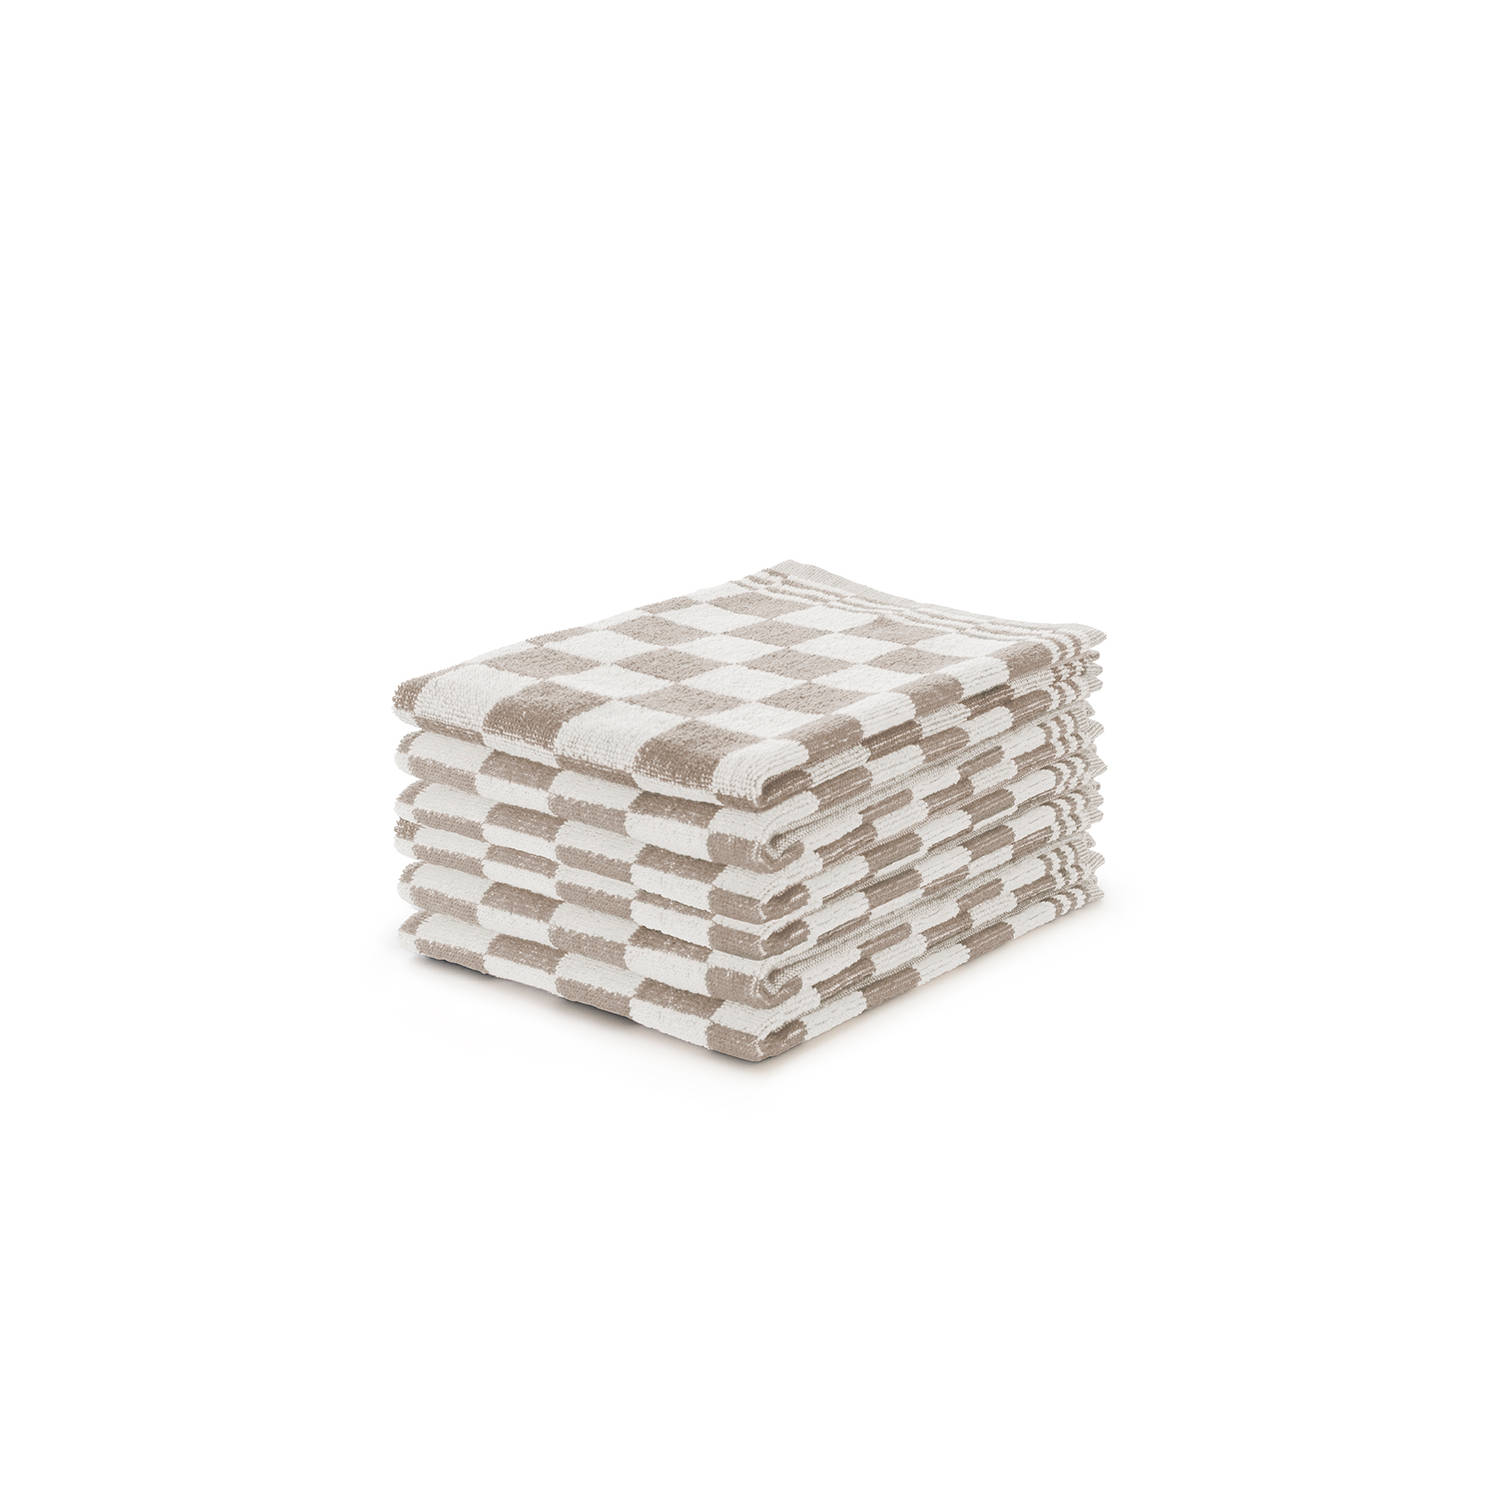 Keukendoekset Blok Zand - 50x50 - Set van 6 - Geblokt - Blokdoeken - 100% katoen - Horeca Keukendoeken